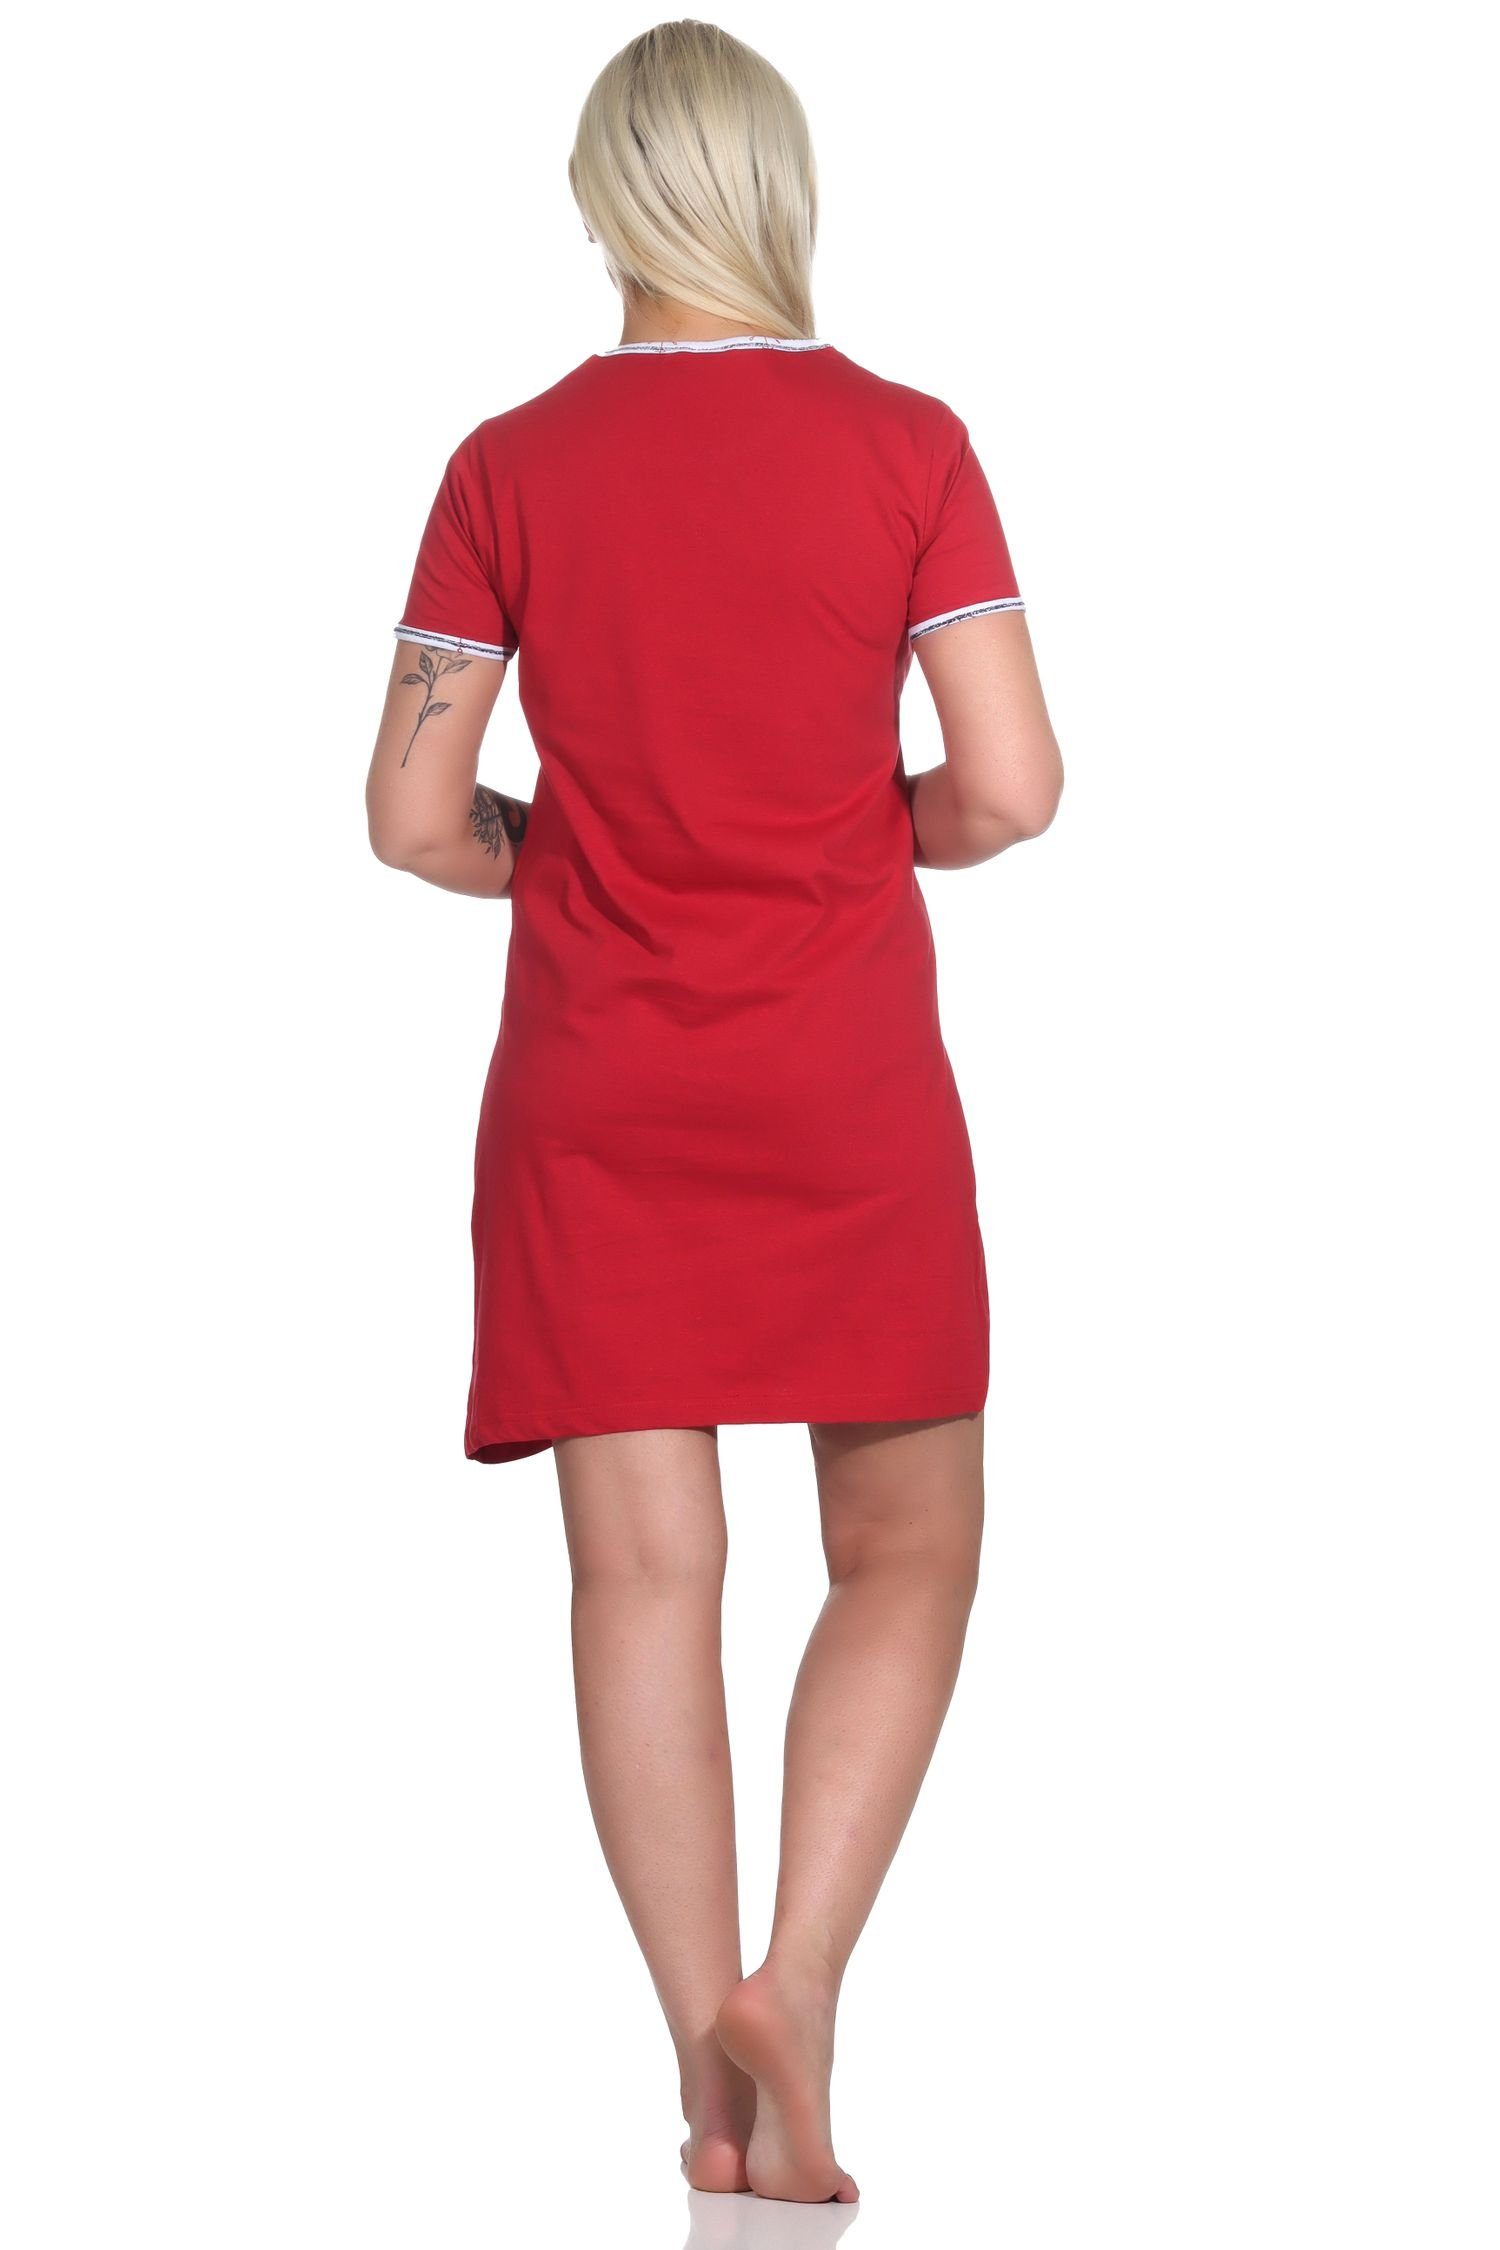 Nachthemd Normann Rundhals Nachthemd, kurzärmliges rot Maritimes mit Bigshirt Damen